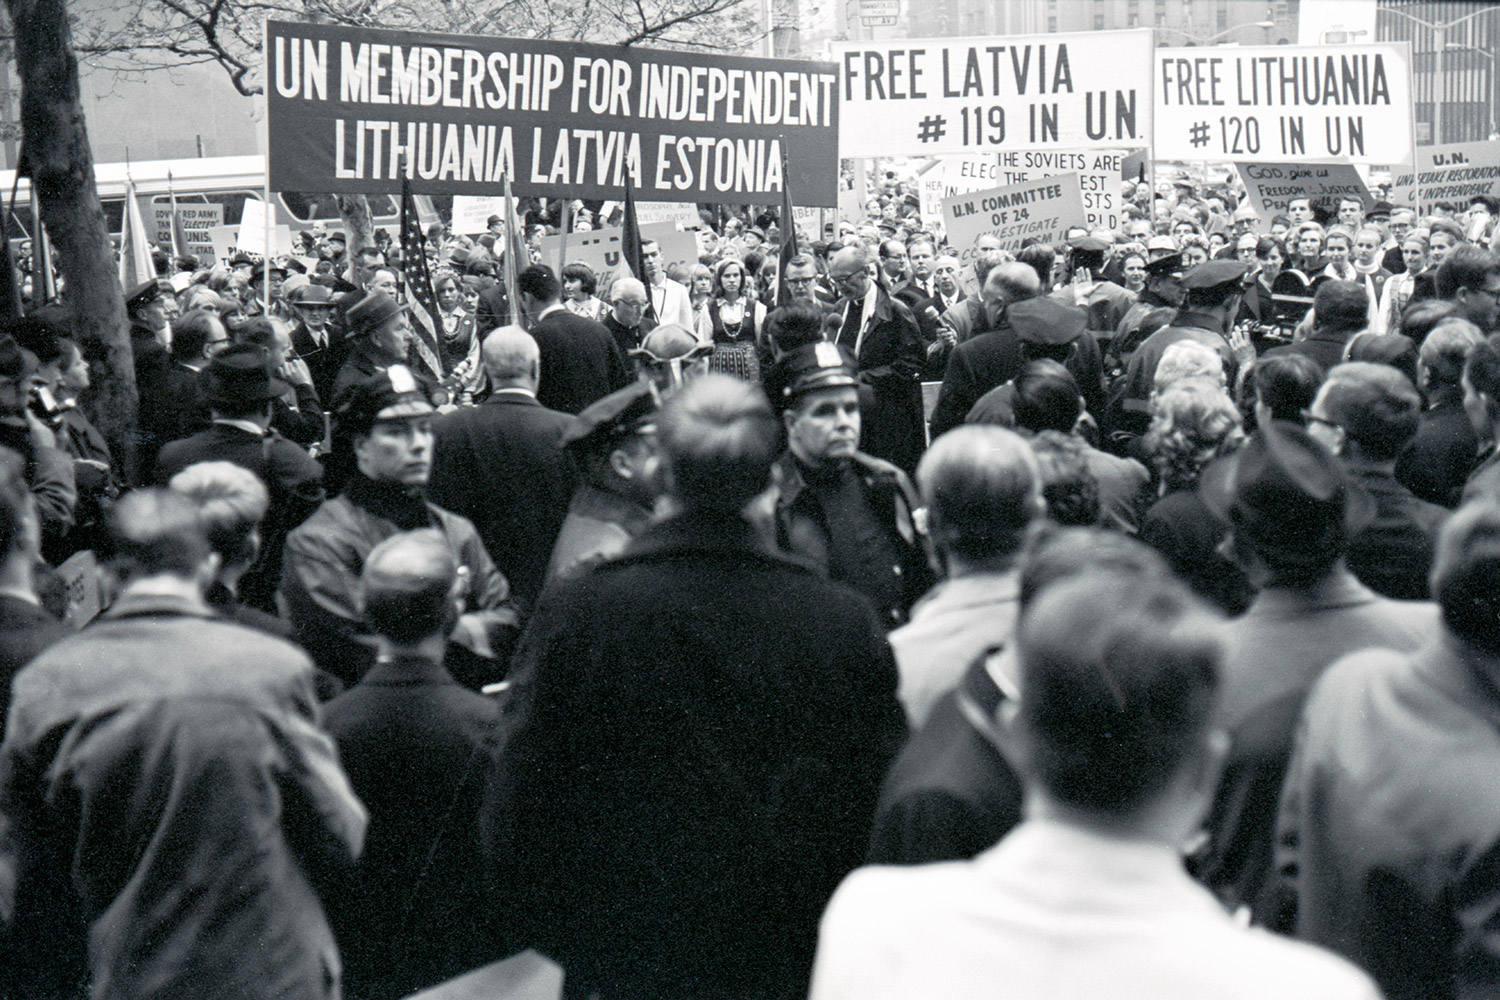 1965 – New York, USA. Manifesto of the representatives of the Baltic States, demanding freedom for Lithuania, Latvia and Estonia. LVCA, photographer: J. Garla.